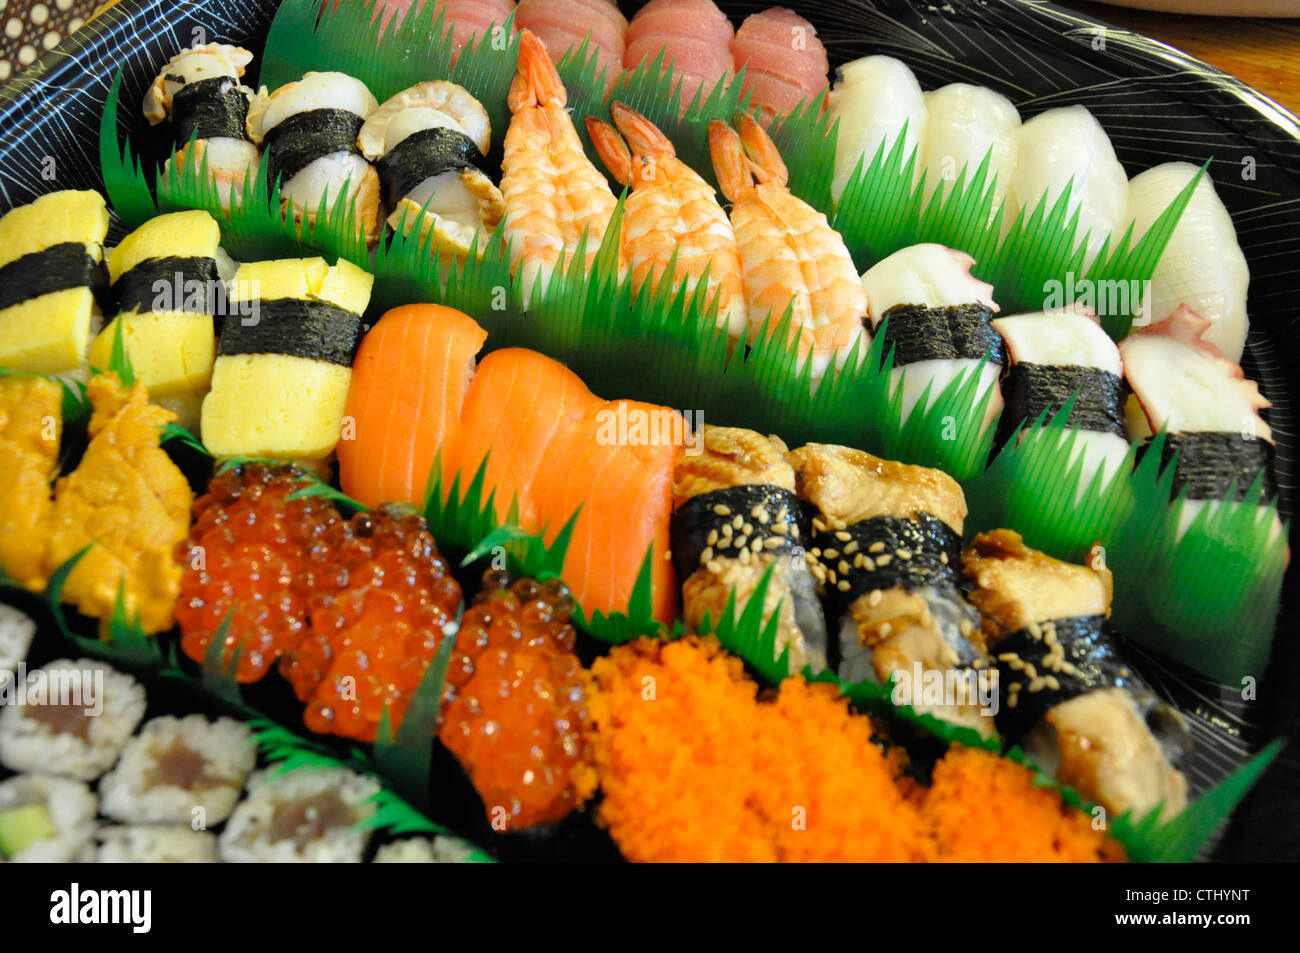 https://c8.alamy.com/comp/CTHYNT/new-years-sushi-CTHYNT.jpg